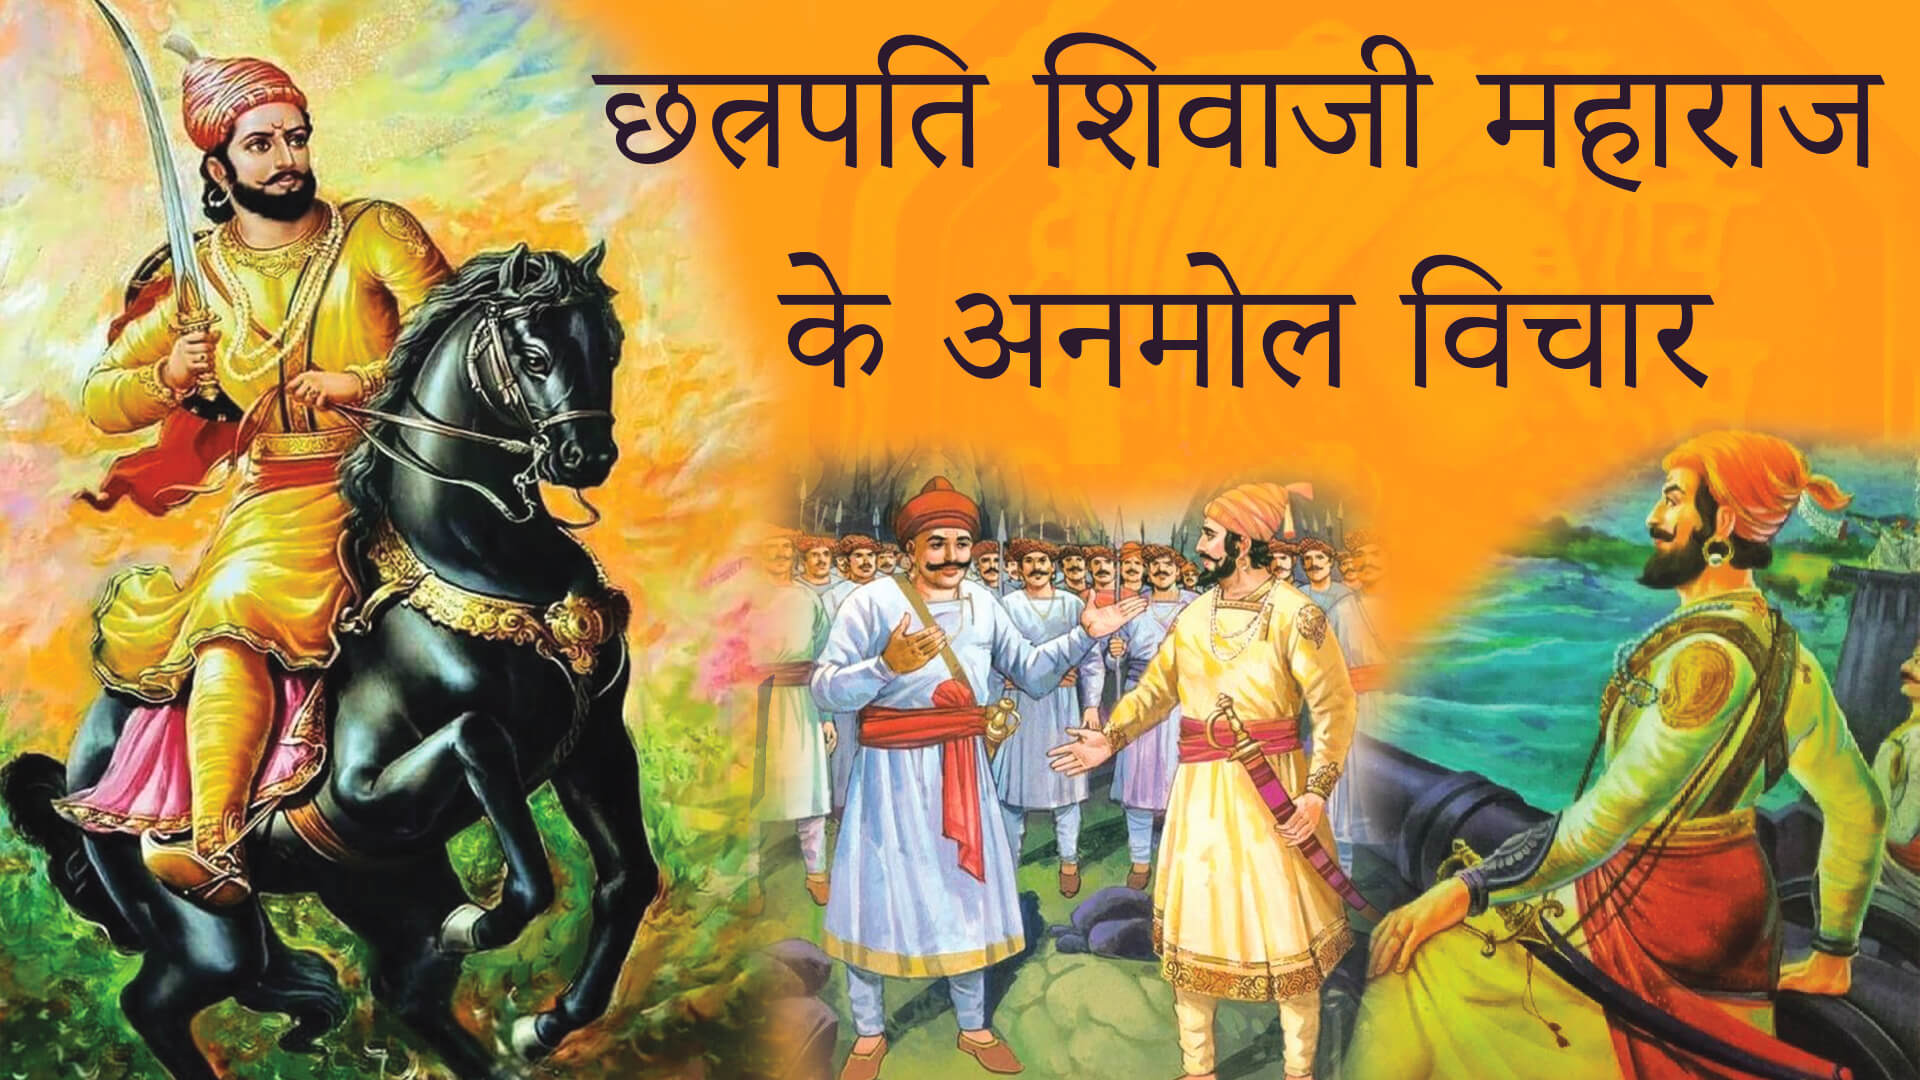 You are currently viewing 15 + Chhatrapati Shivaji Maharaj Quotes In Hindi – छत्रपति शिवाजी महाराज के अनमोल विचार